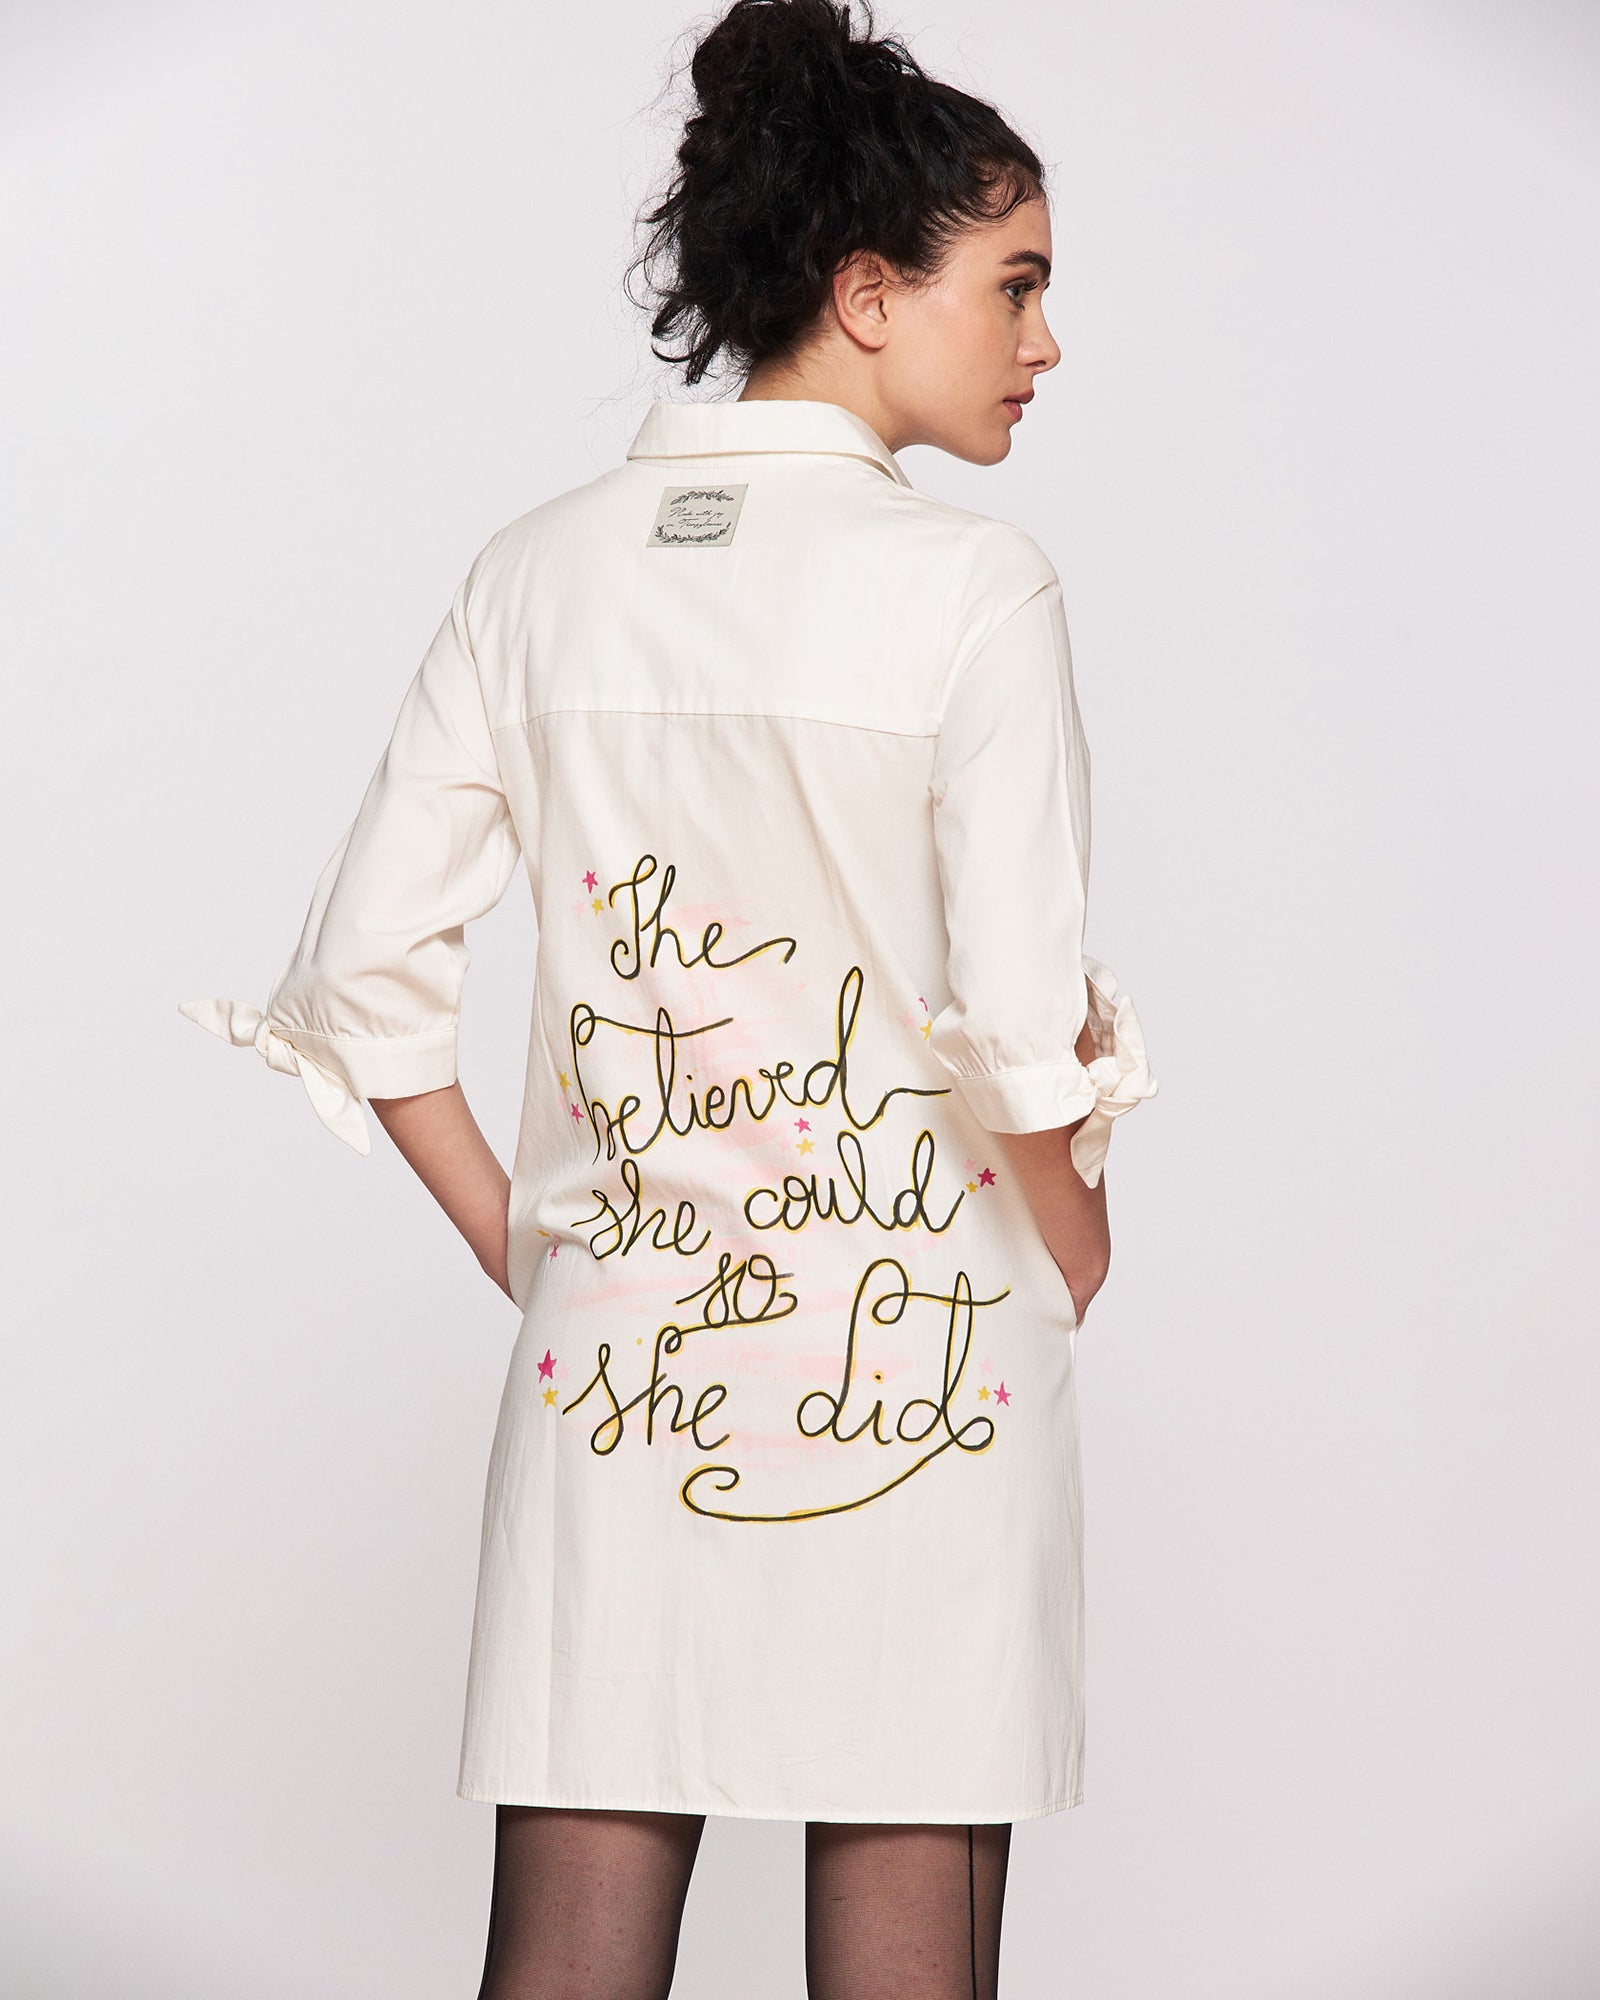 Women's dress with inspirational message "Positivity"